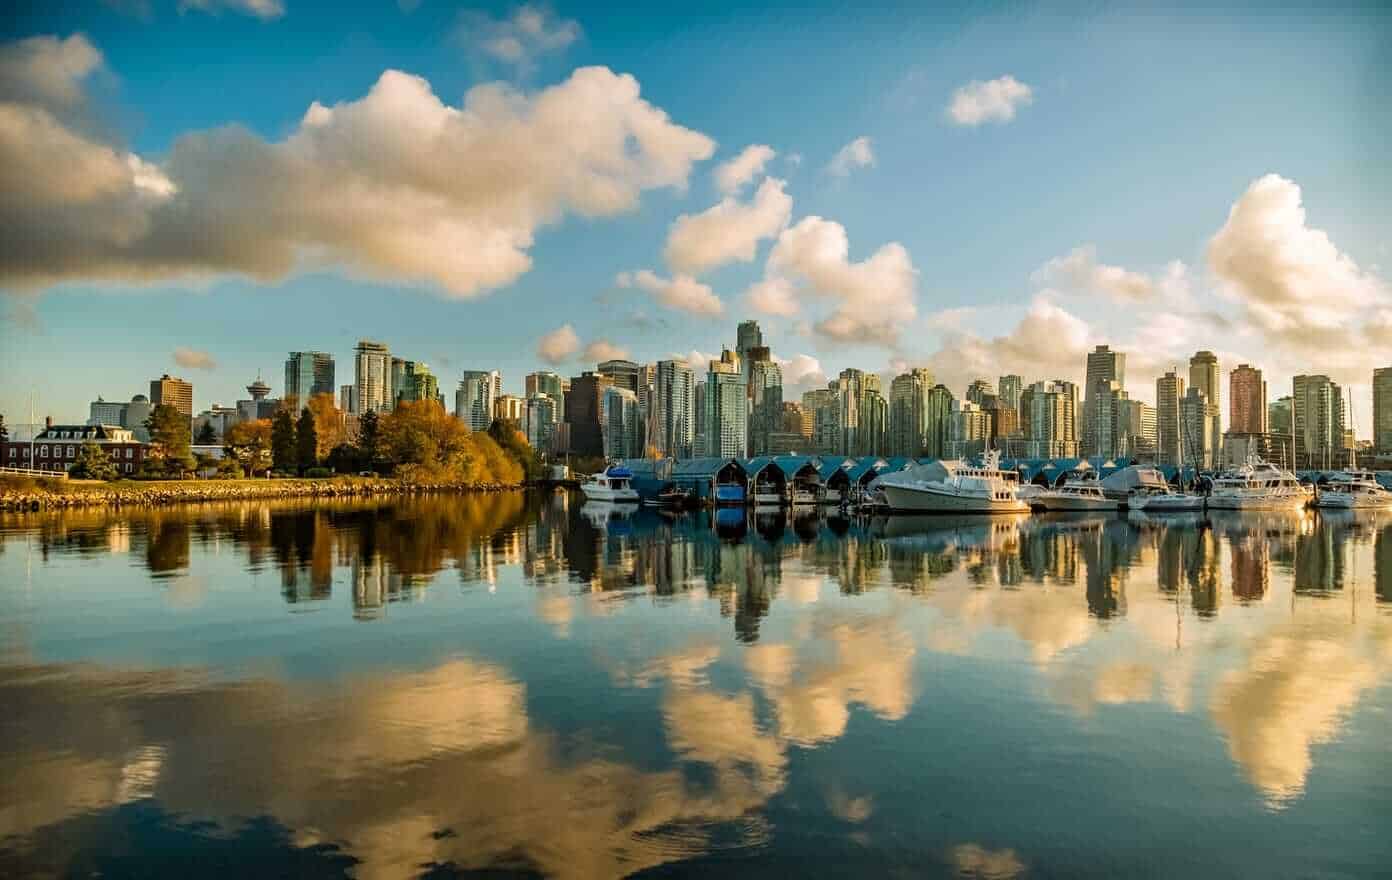 Stanley Park Dr, Vancouver, Canada